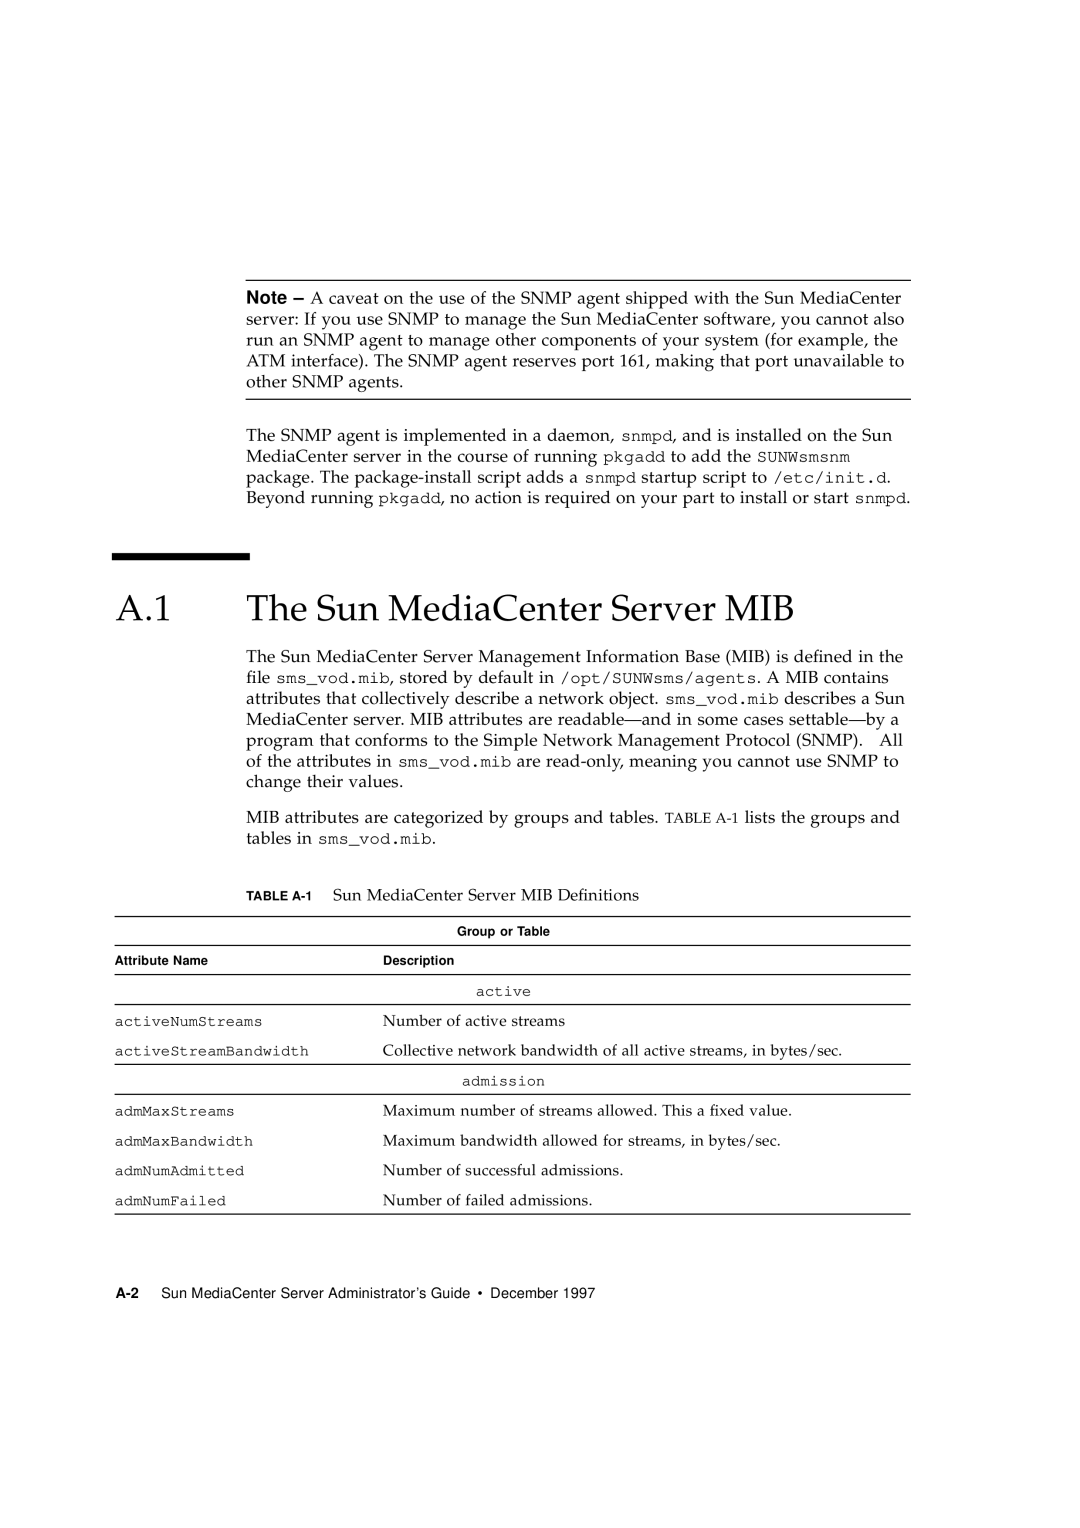 Sun Microsystems 2.1 manual A.1 The Sun MediaCenter Server MIB, TABLE A-1 Sun MediaCenter Server MIB Deﬁnitions 